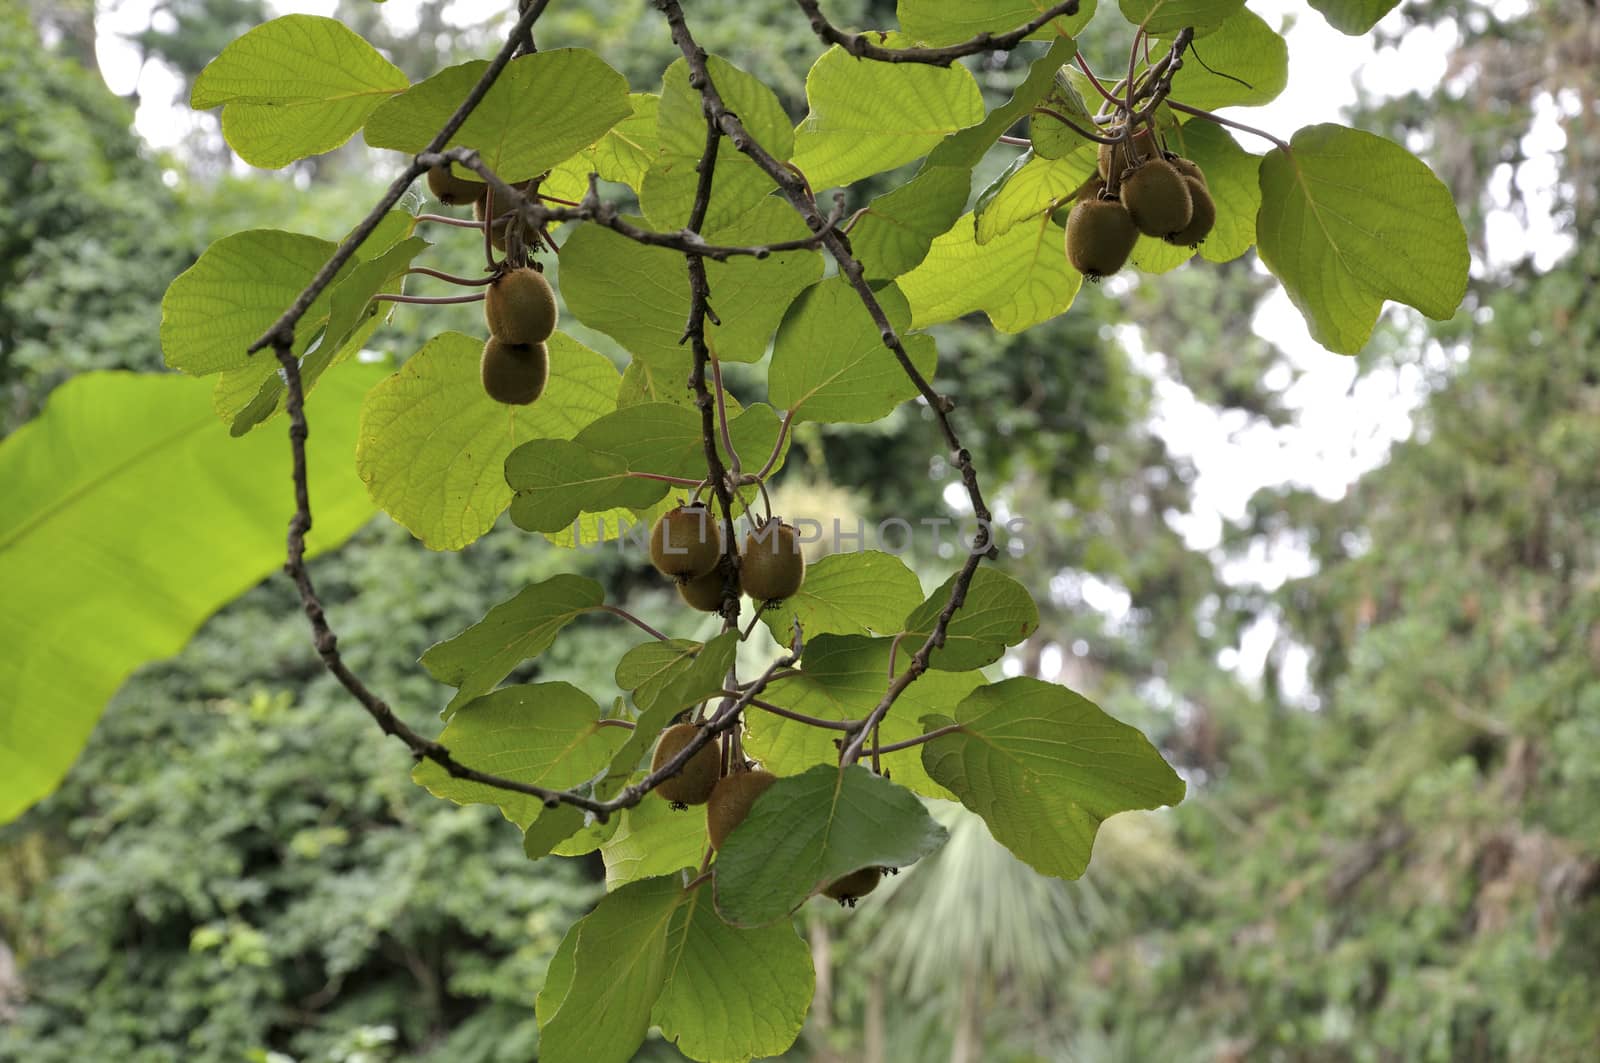 Actinidia fruit on the liana